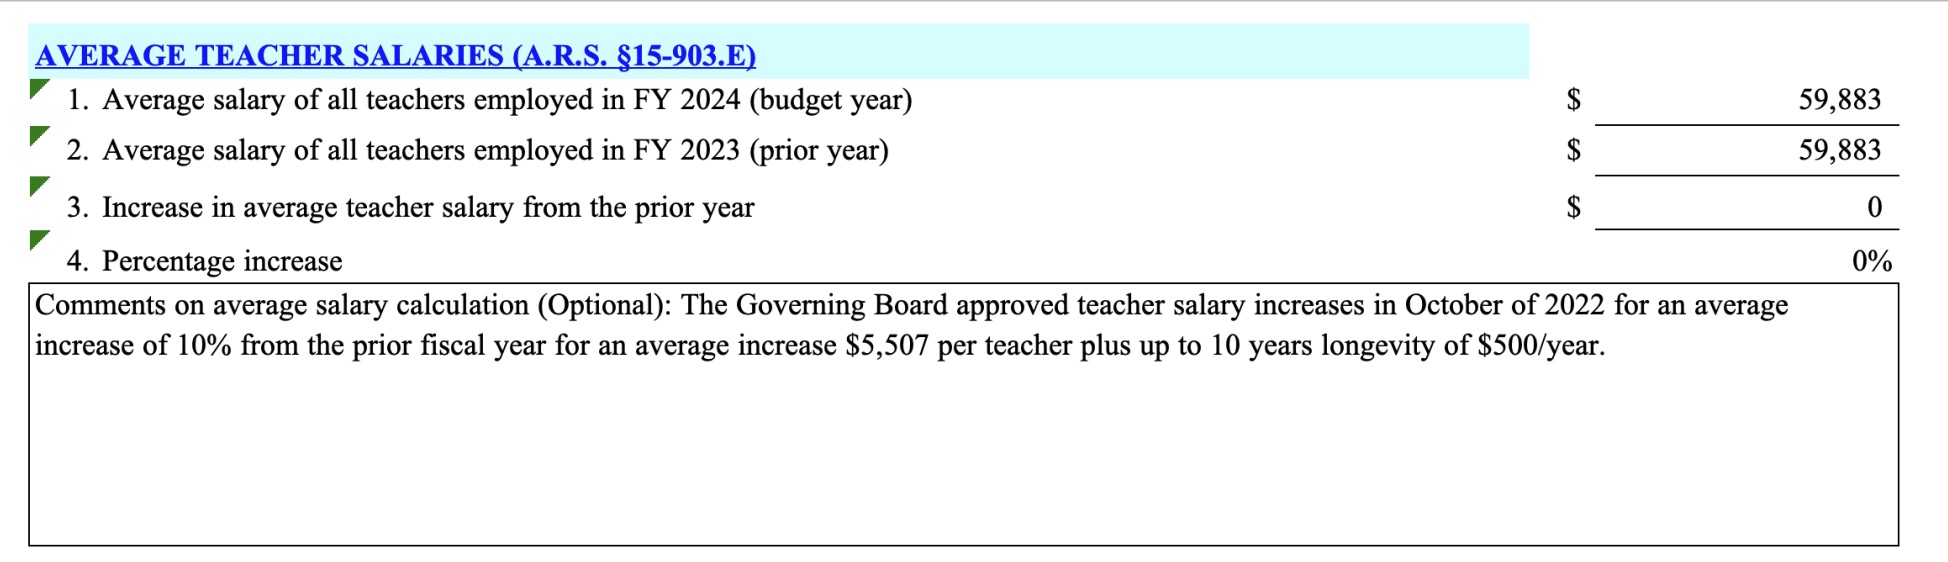 Average Teacher Salaries